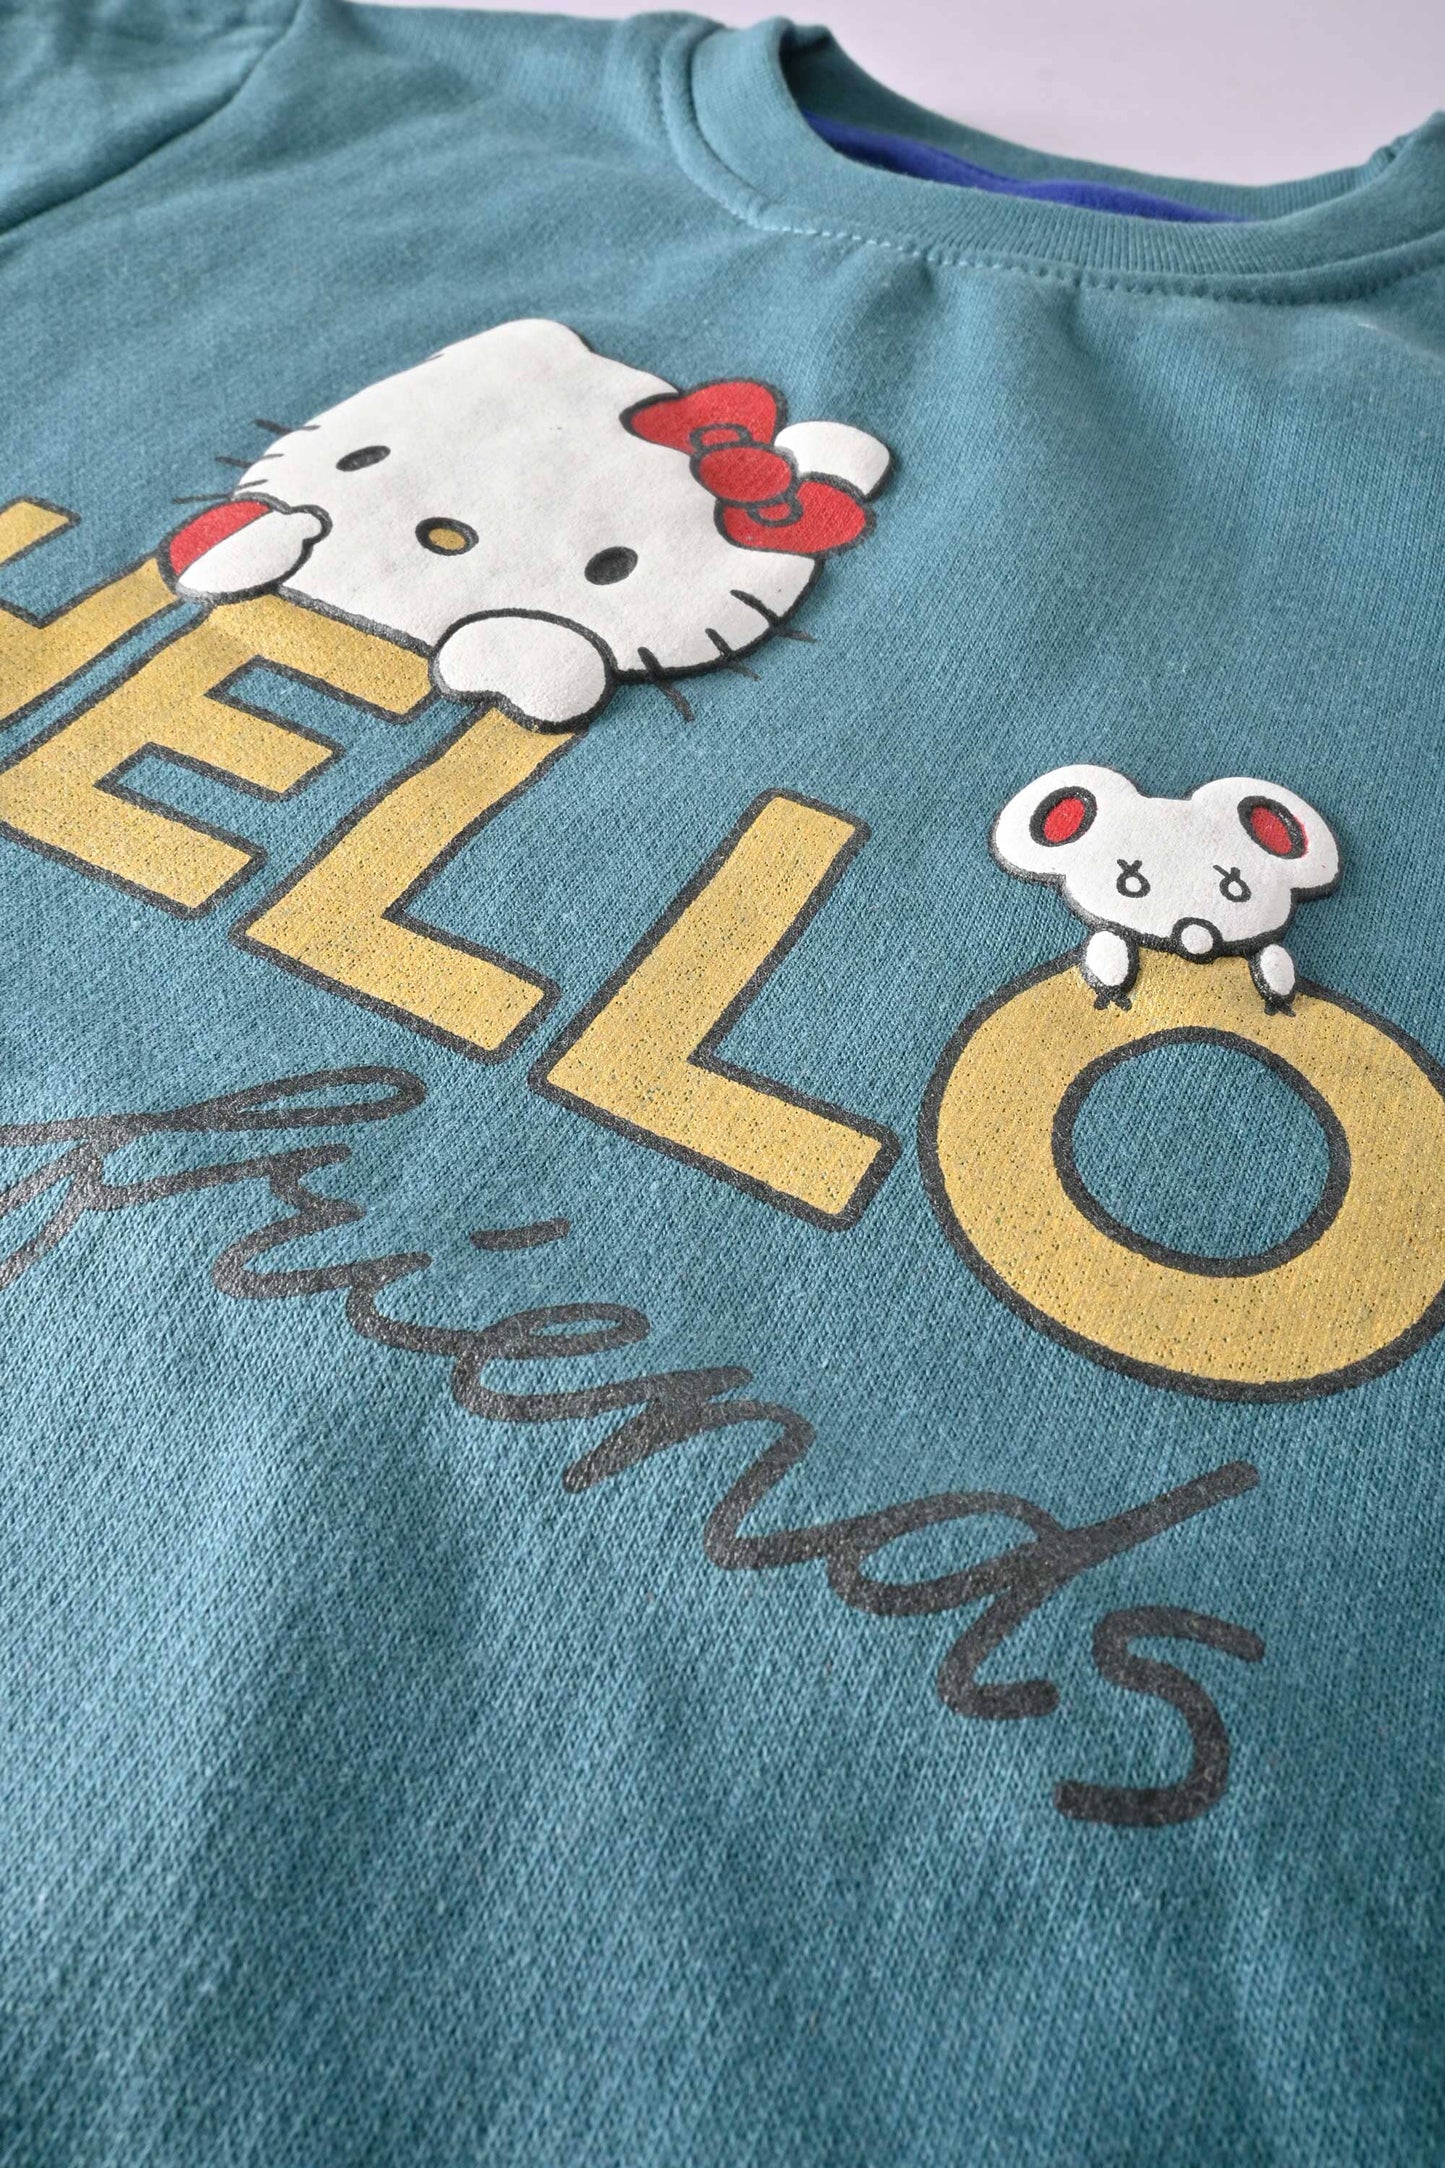 Minoti Kid's Hello Kitty Fleece Sweat Shirt Kid's Sweat Shirt ZBC 